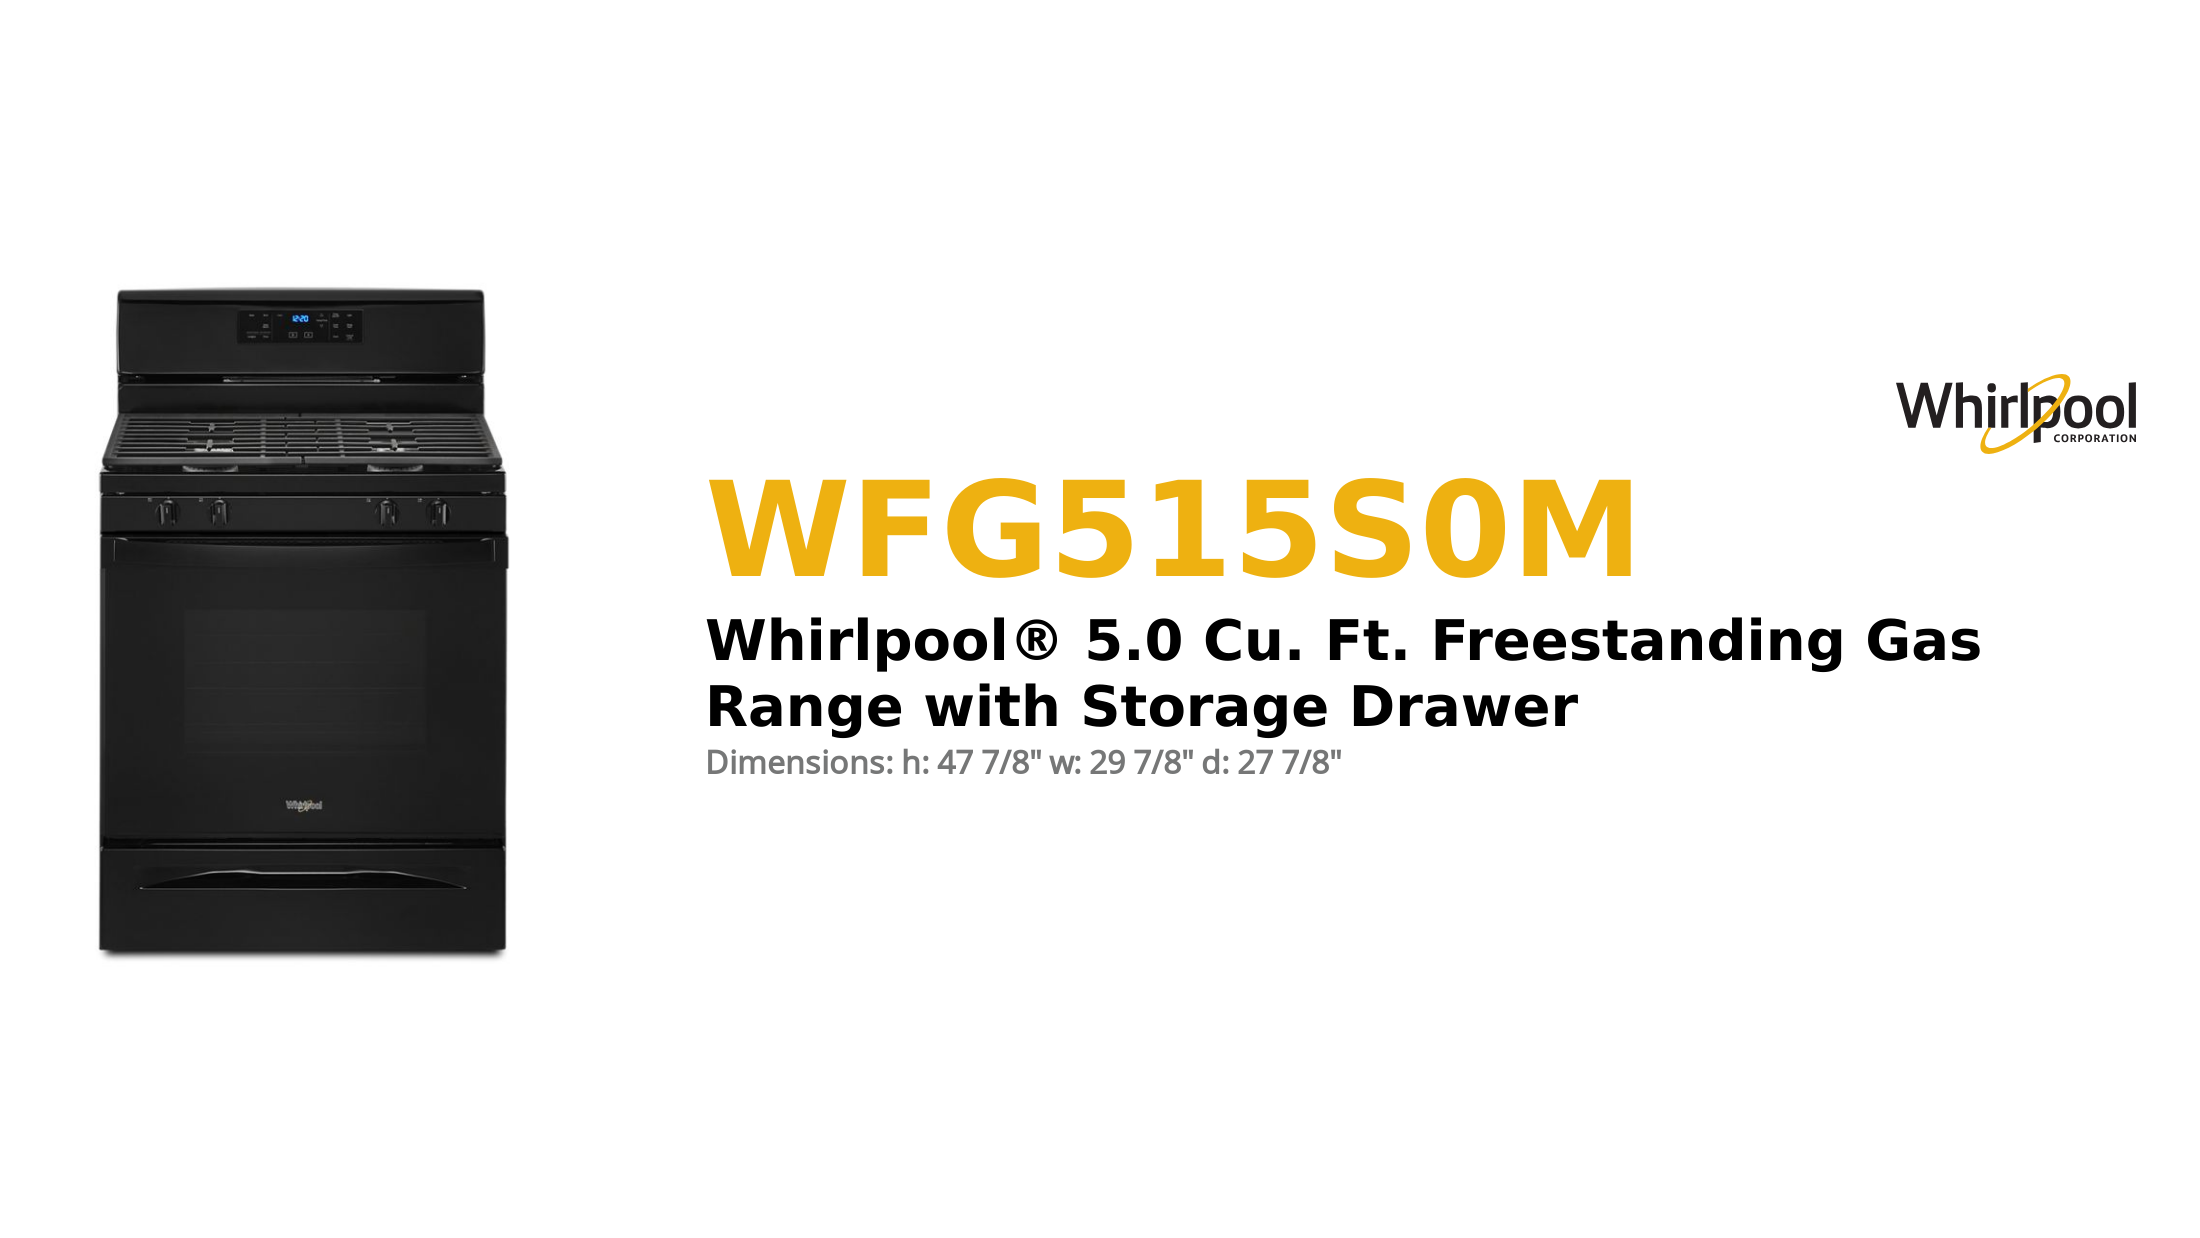 Whirlpool® 5.0 Cu. Ft. Freestanding Gas Range with Storage Drawer